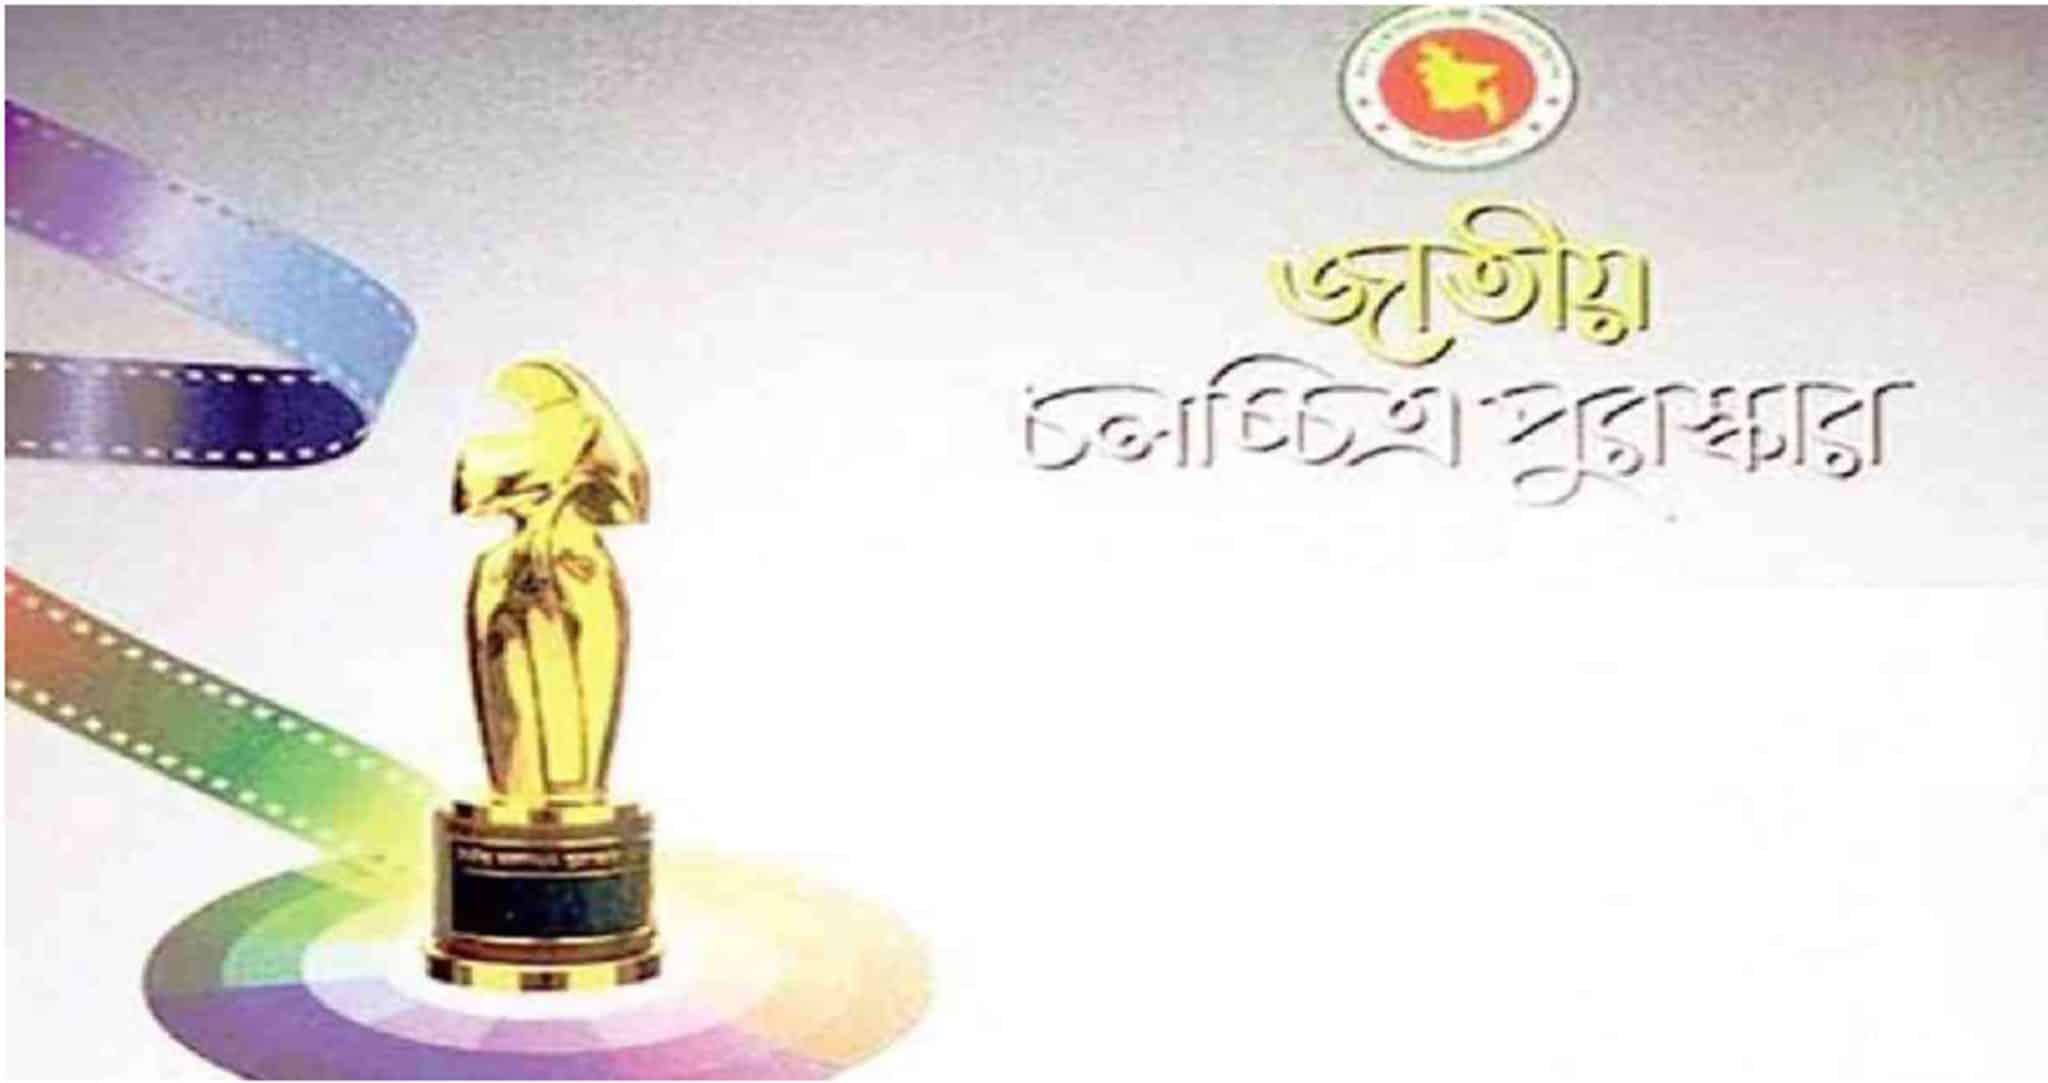 PM distributes National Film Awards tomorrow